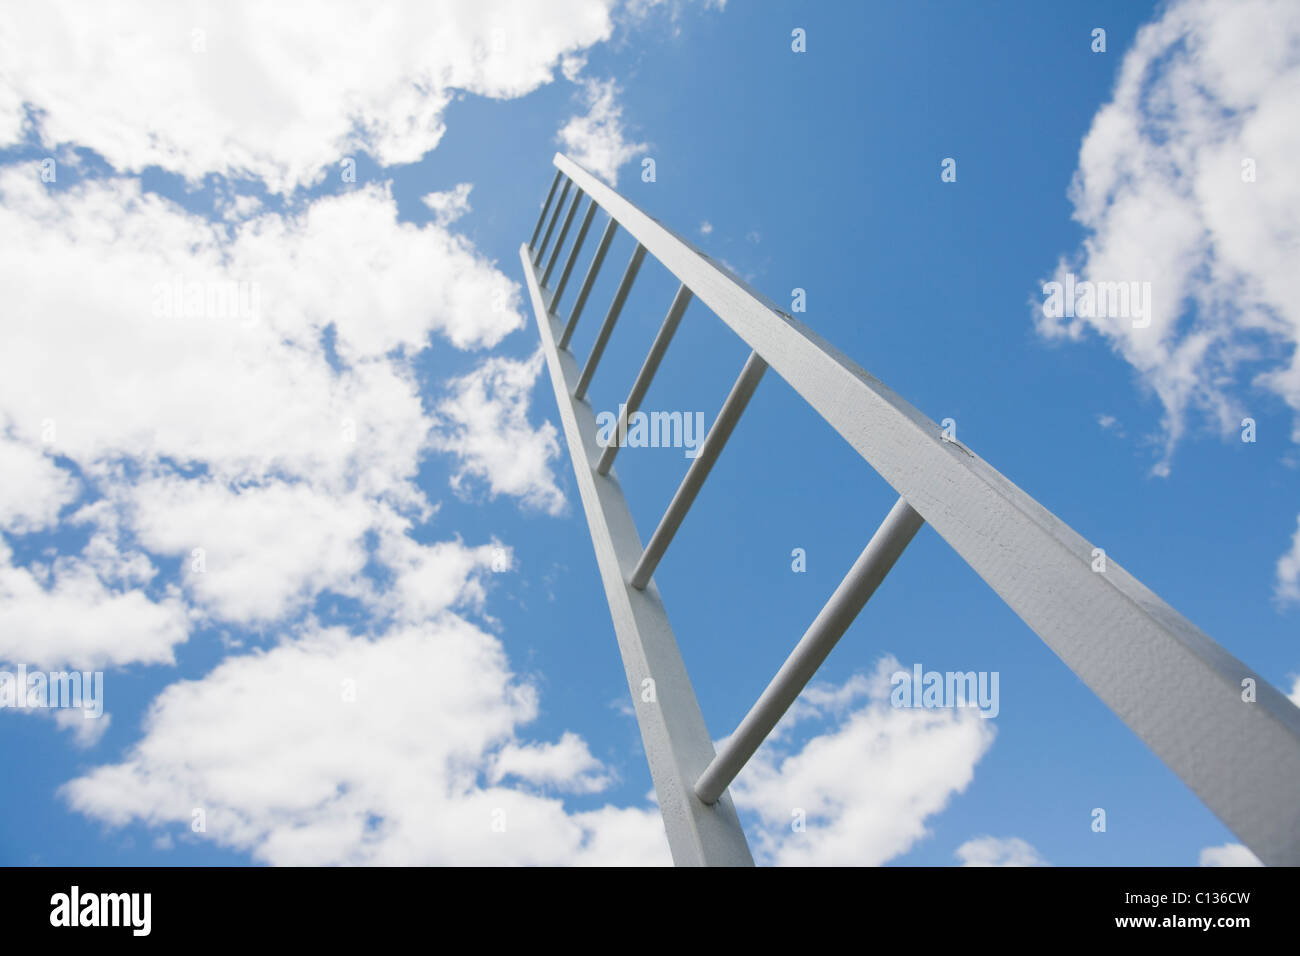 USA, New Jersey, ladder reaching cloudy sky Stock Photo